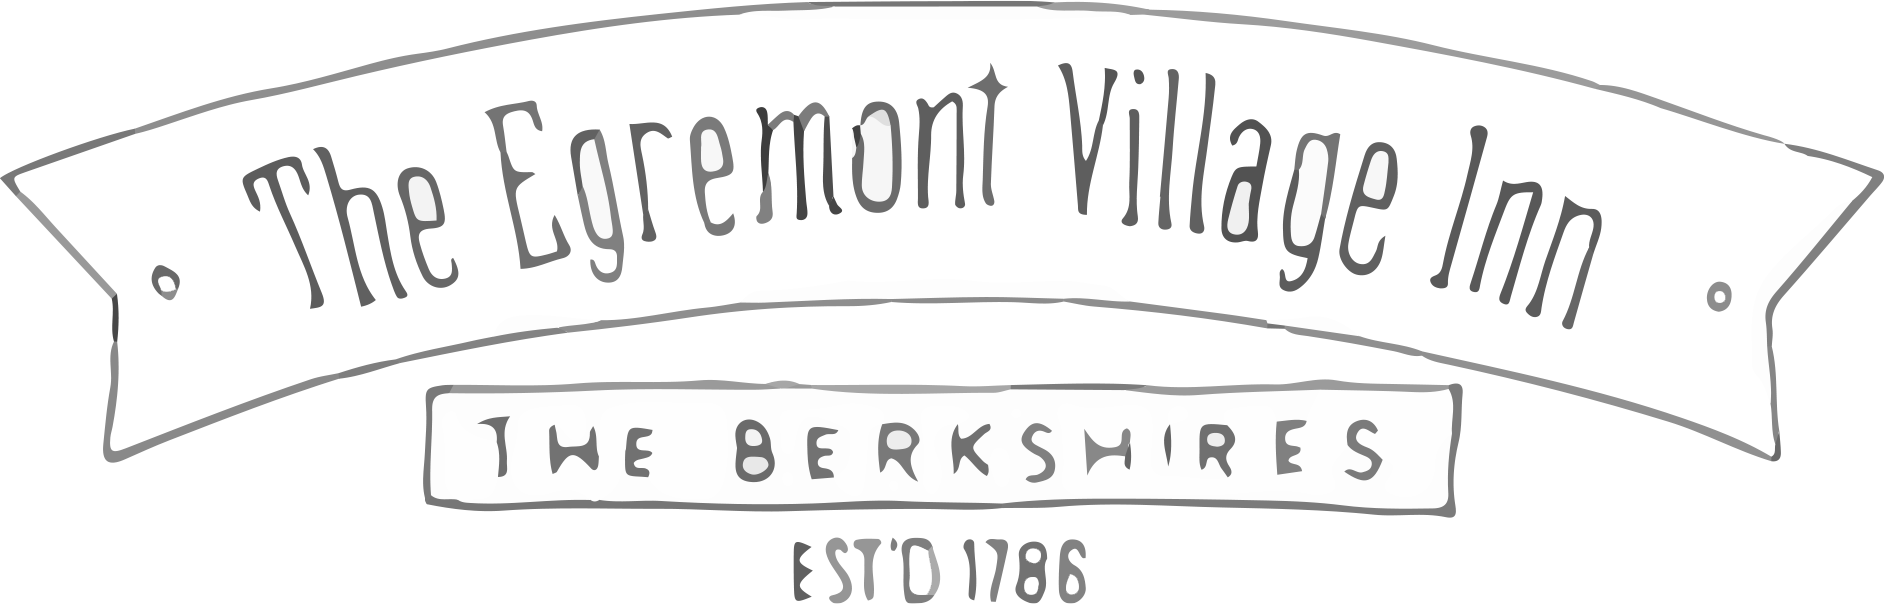 The Egremont Village Inn